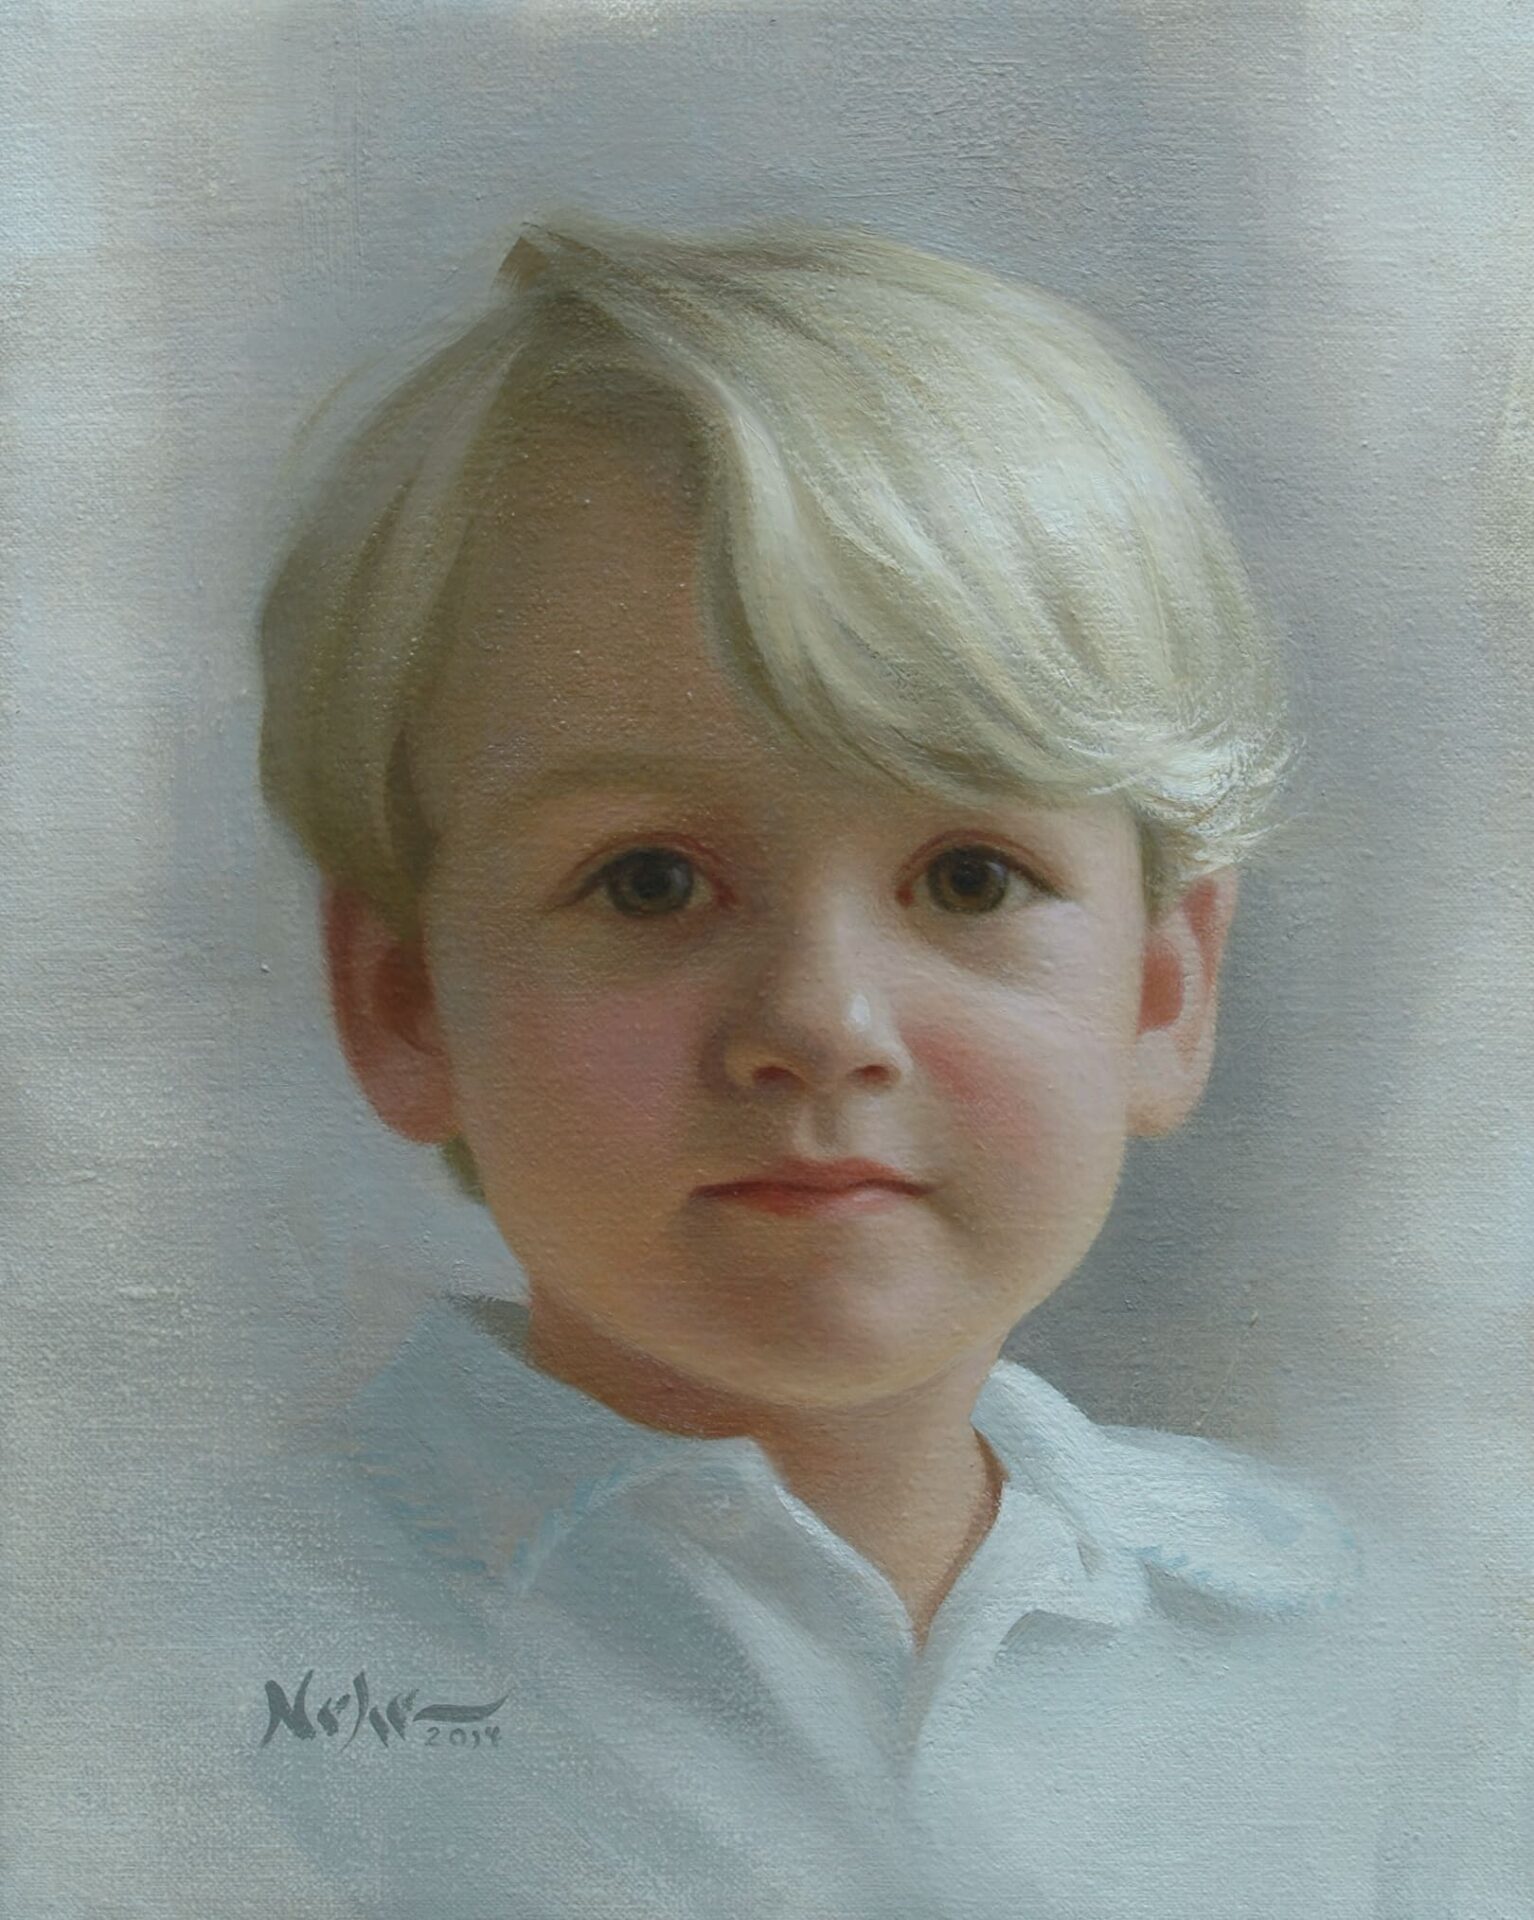 A boy’s portrait